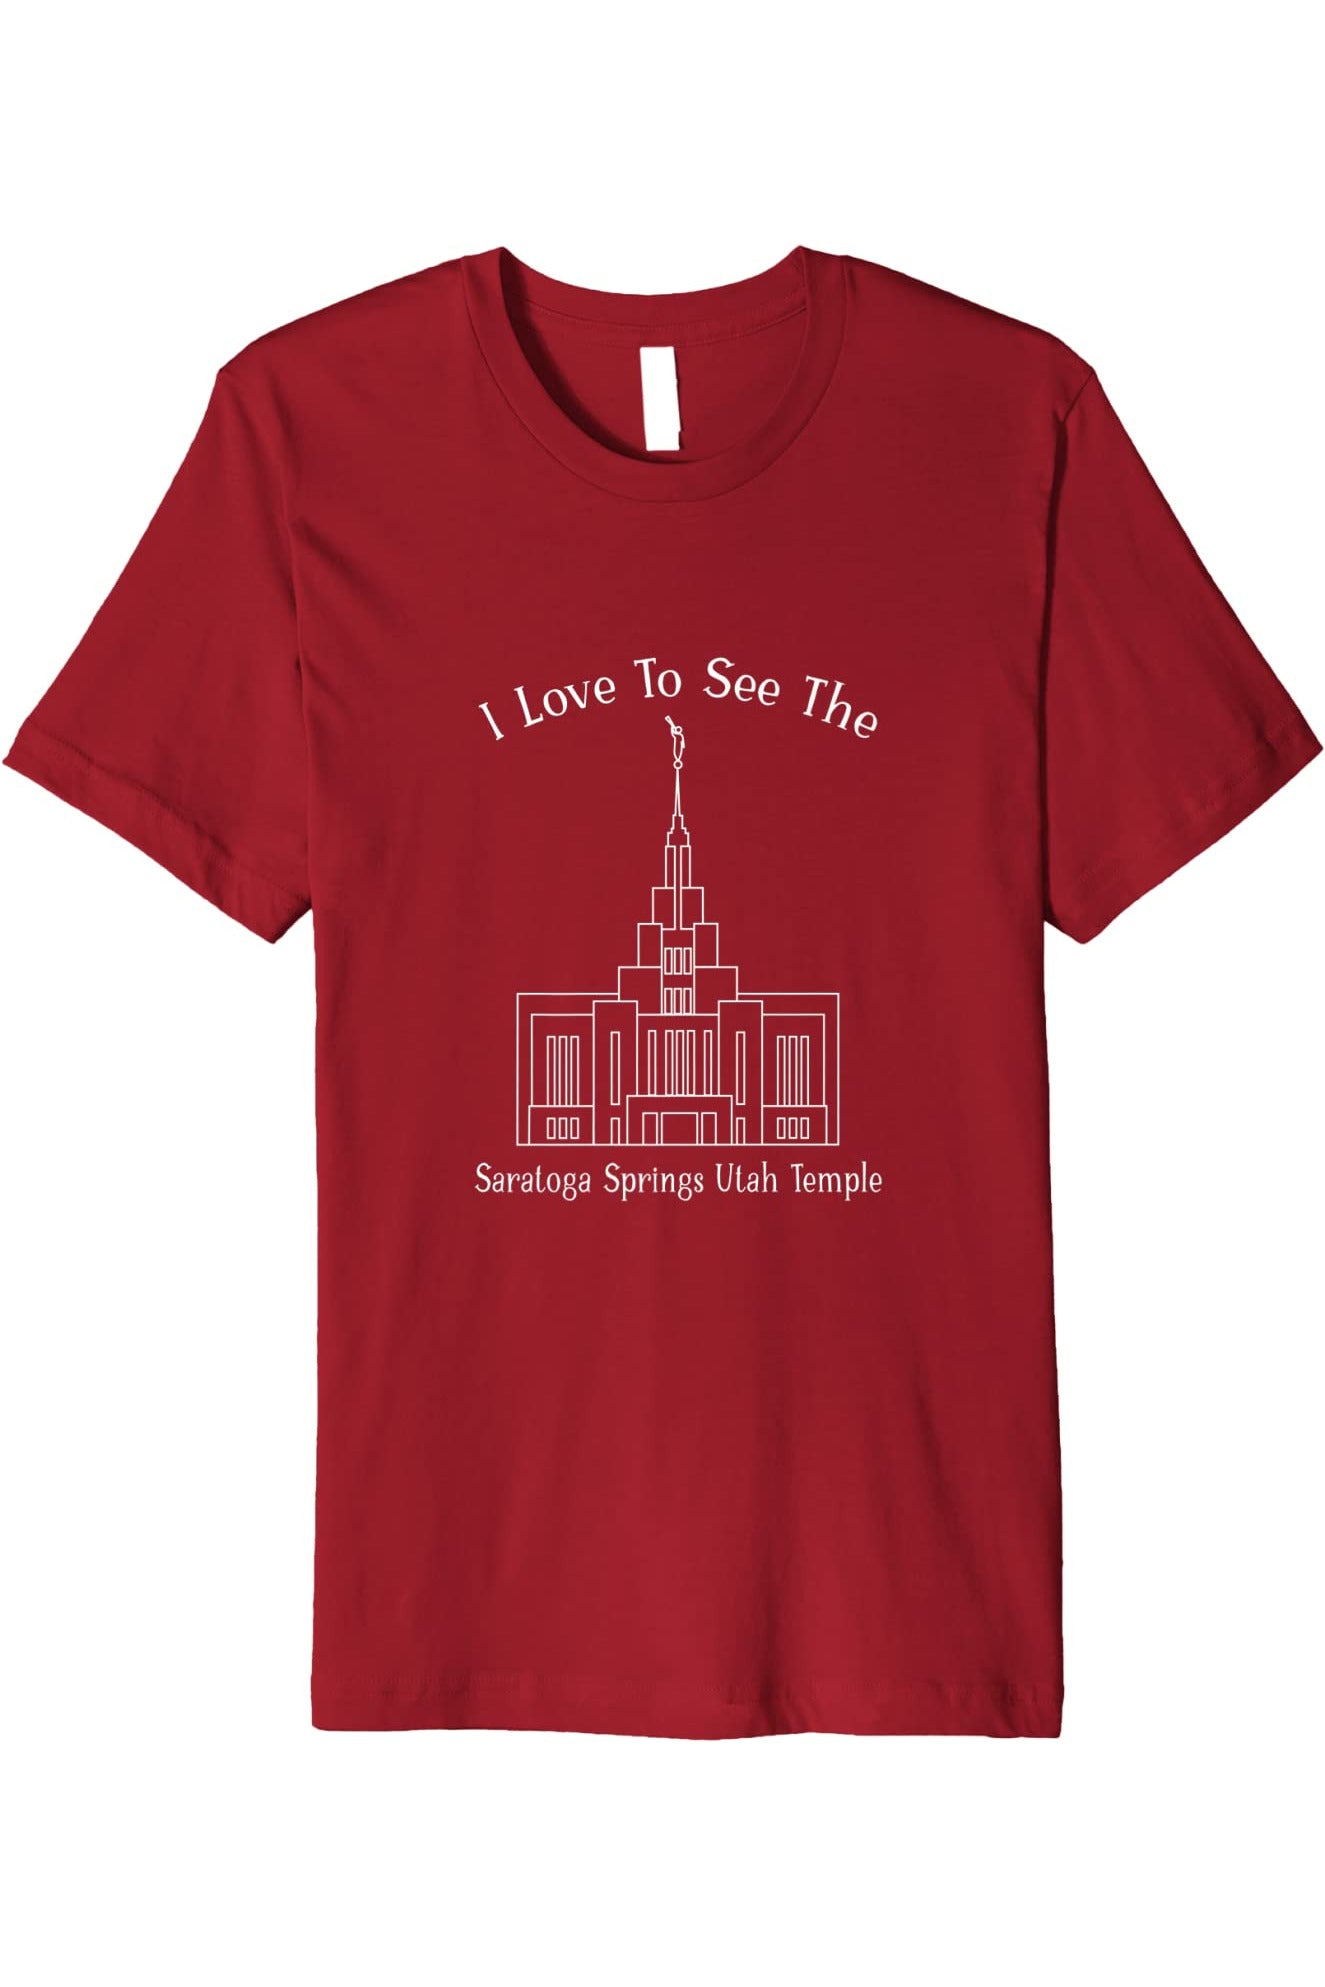 Saratoga Springs Utah Temple T-Shirt - Premium - Happy Style (English) US